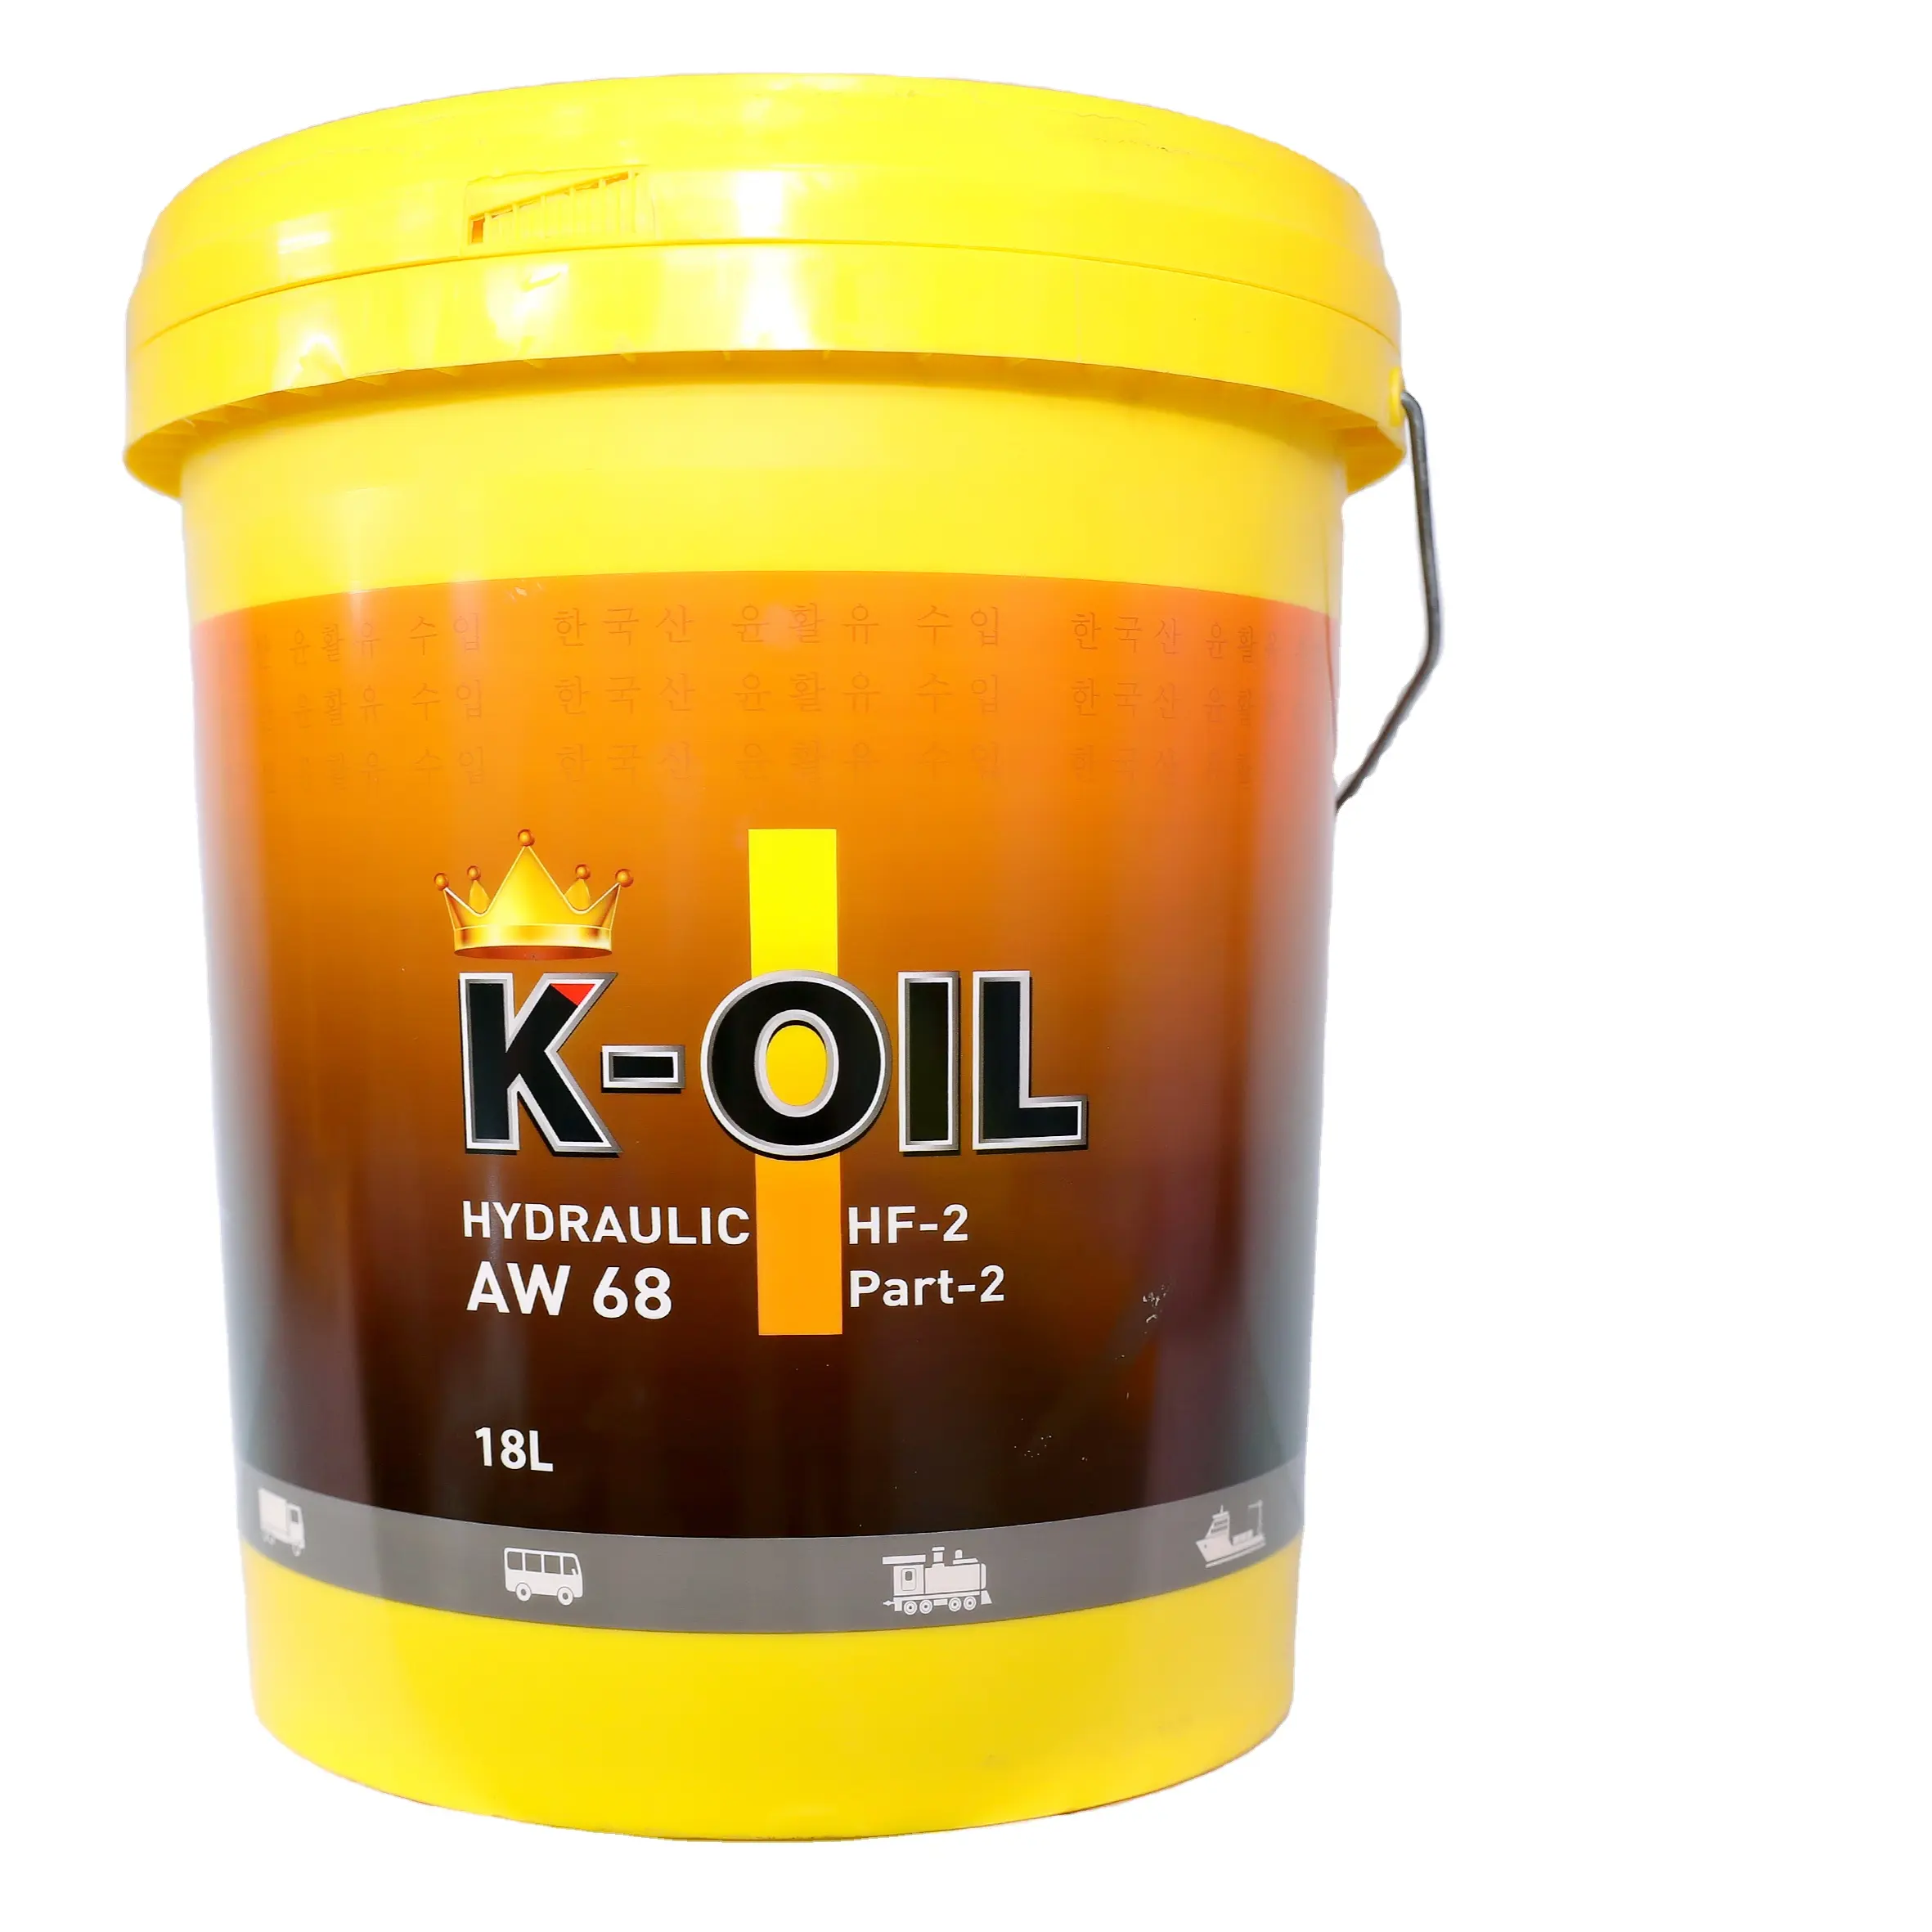 Kオイル油圧AW68潤滑油は、エンジン性能と産業機械の工場価格適用を向上させます